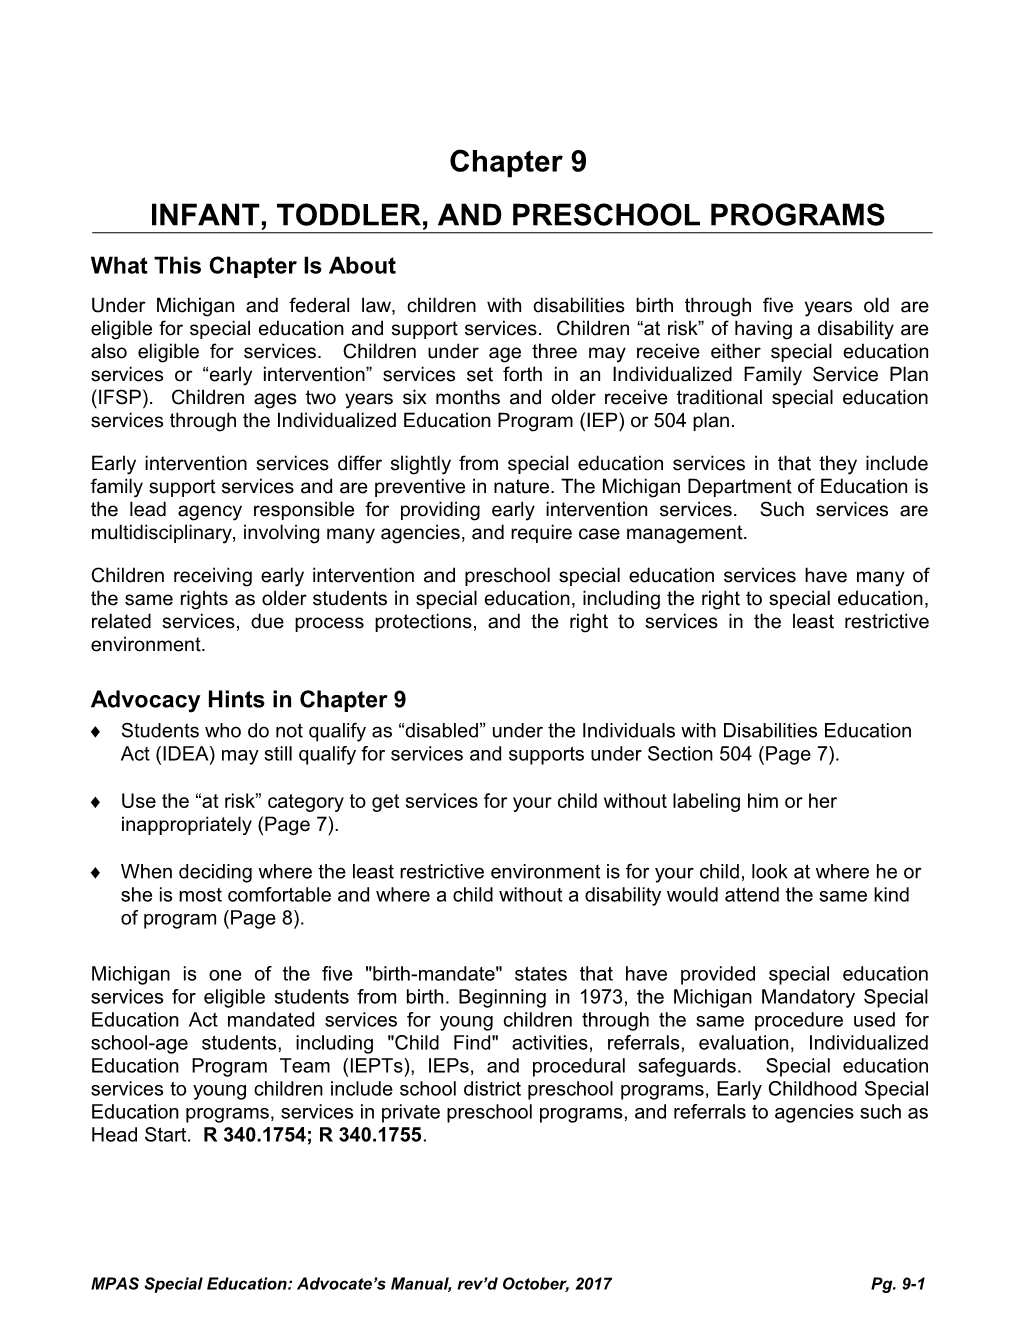 Infant, Toddler, and Preschool Programs